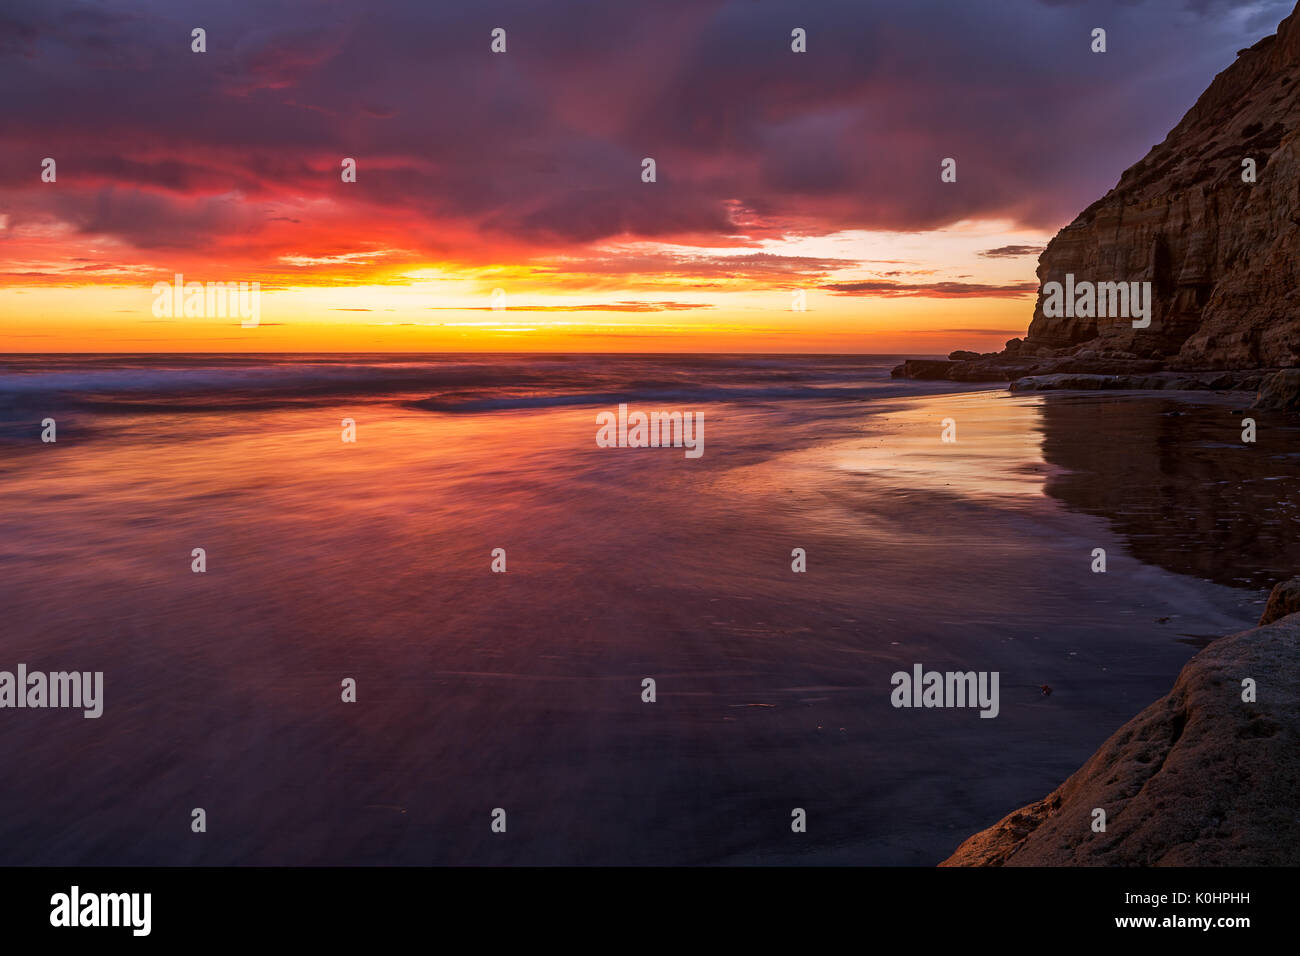 Farbenfroher Sonnenuntergang über dem Meer am Strand in Del Mar, Kalifornien Stockfoto